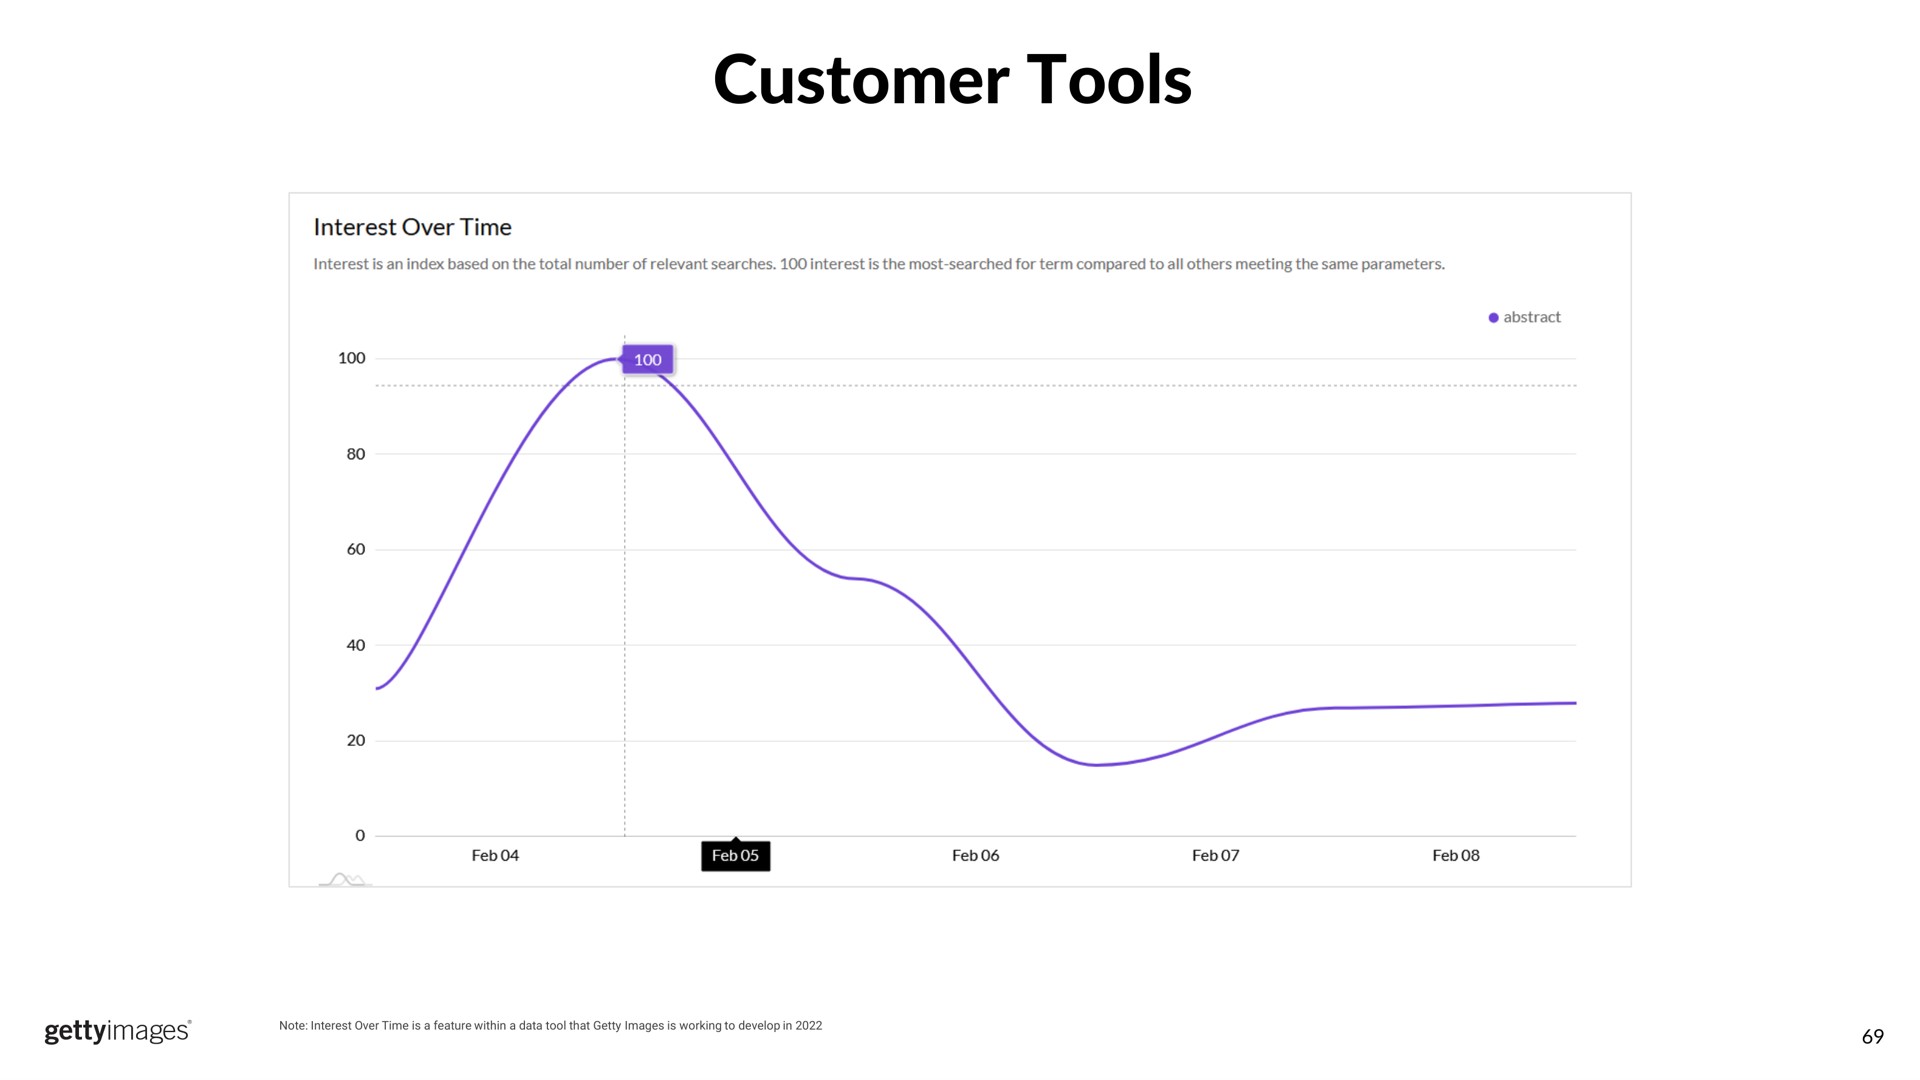 customer tools | Getty